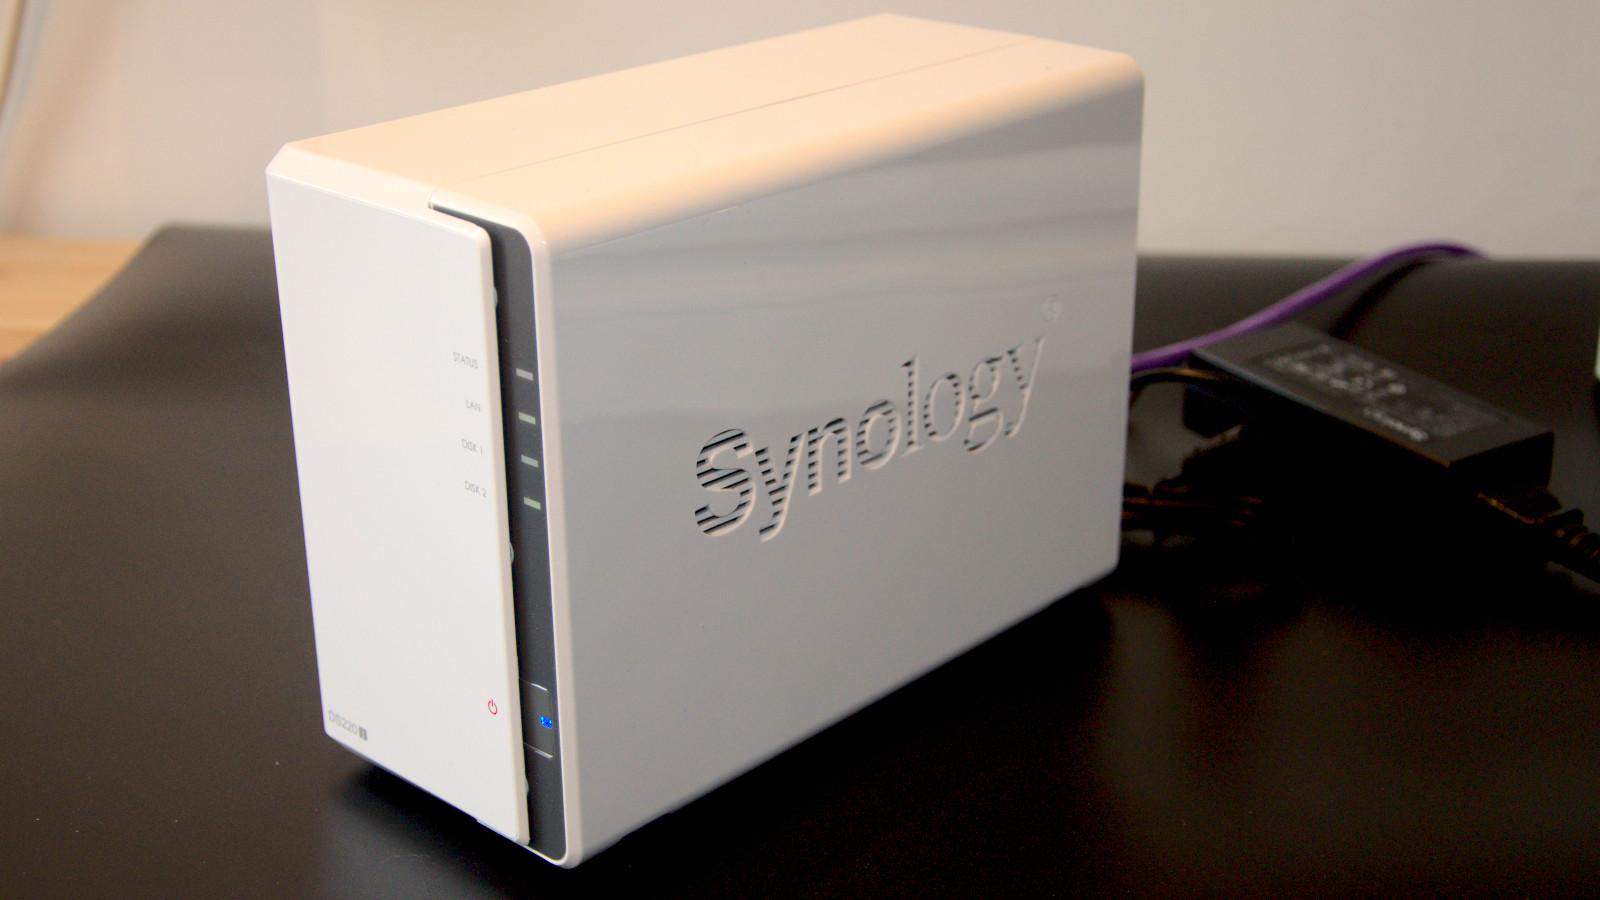 Synology DS220j - Al met al de beste